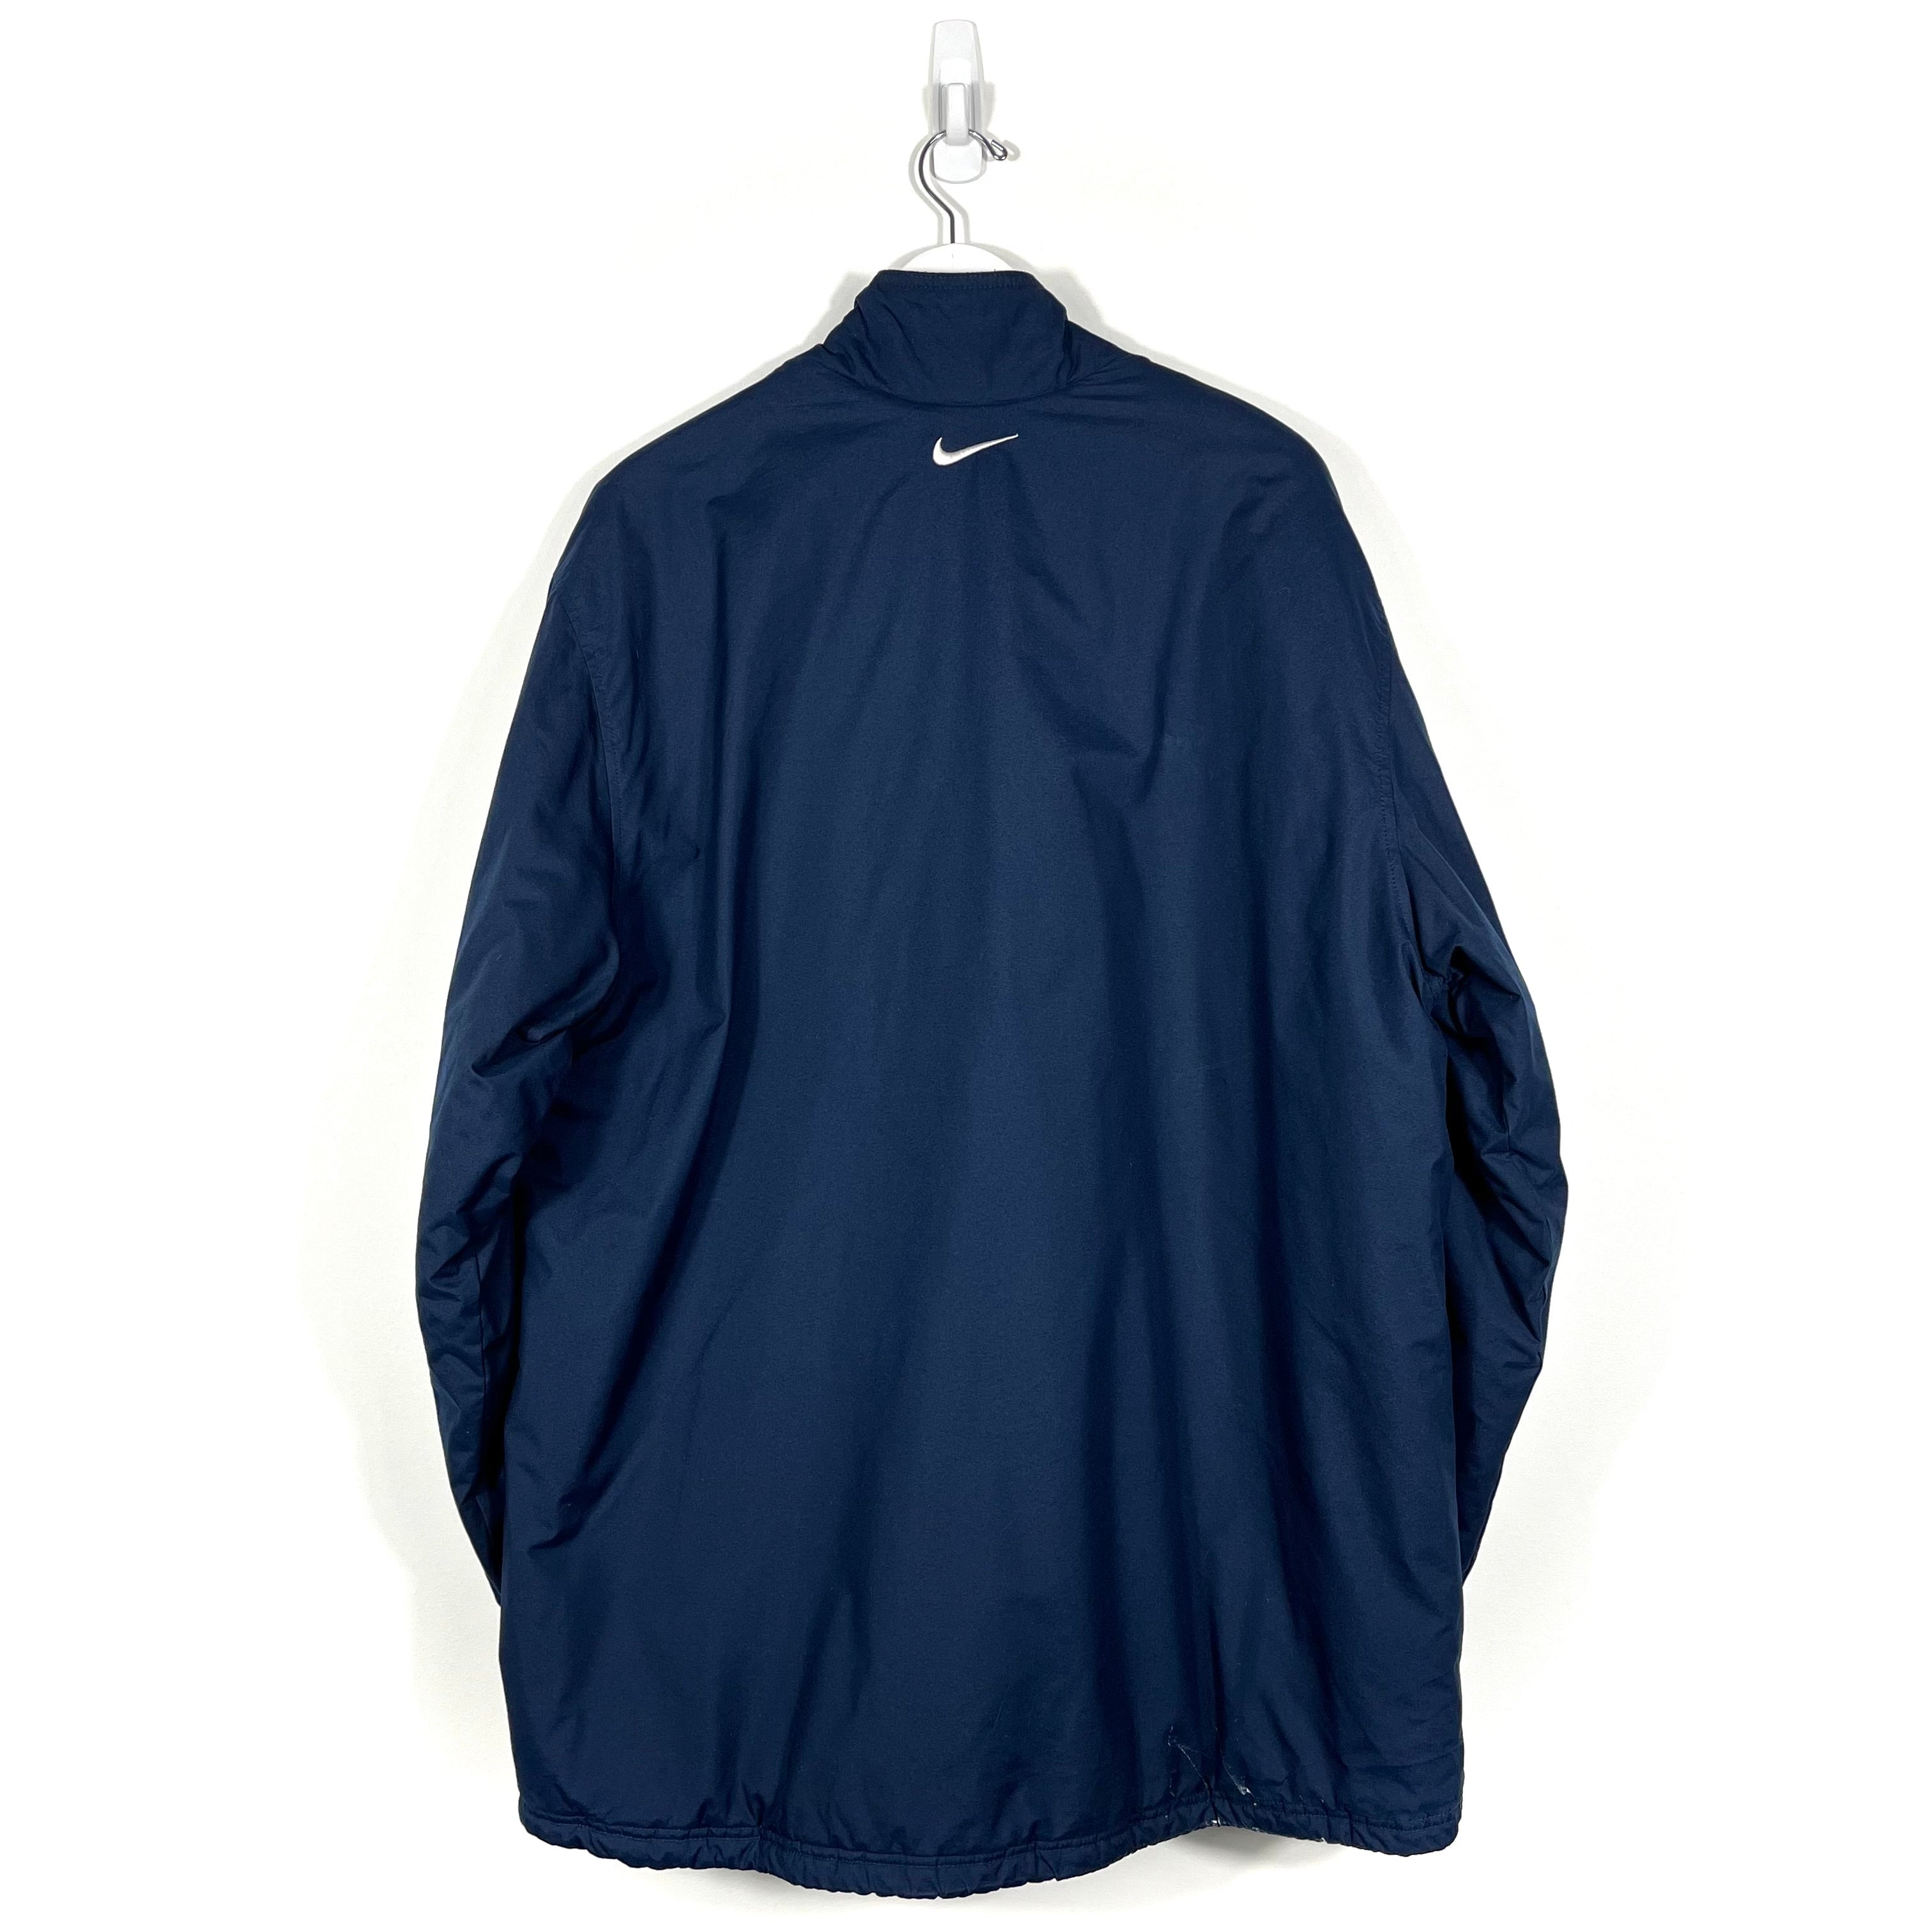 Vintage Nike Insulated Jacket - Men's XL